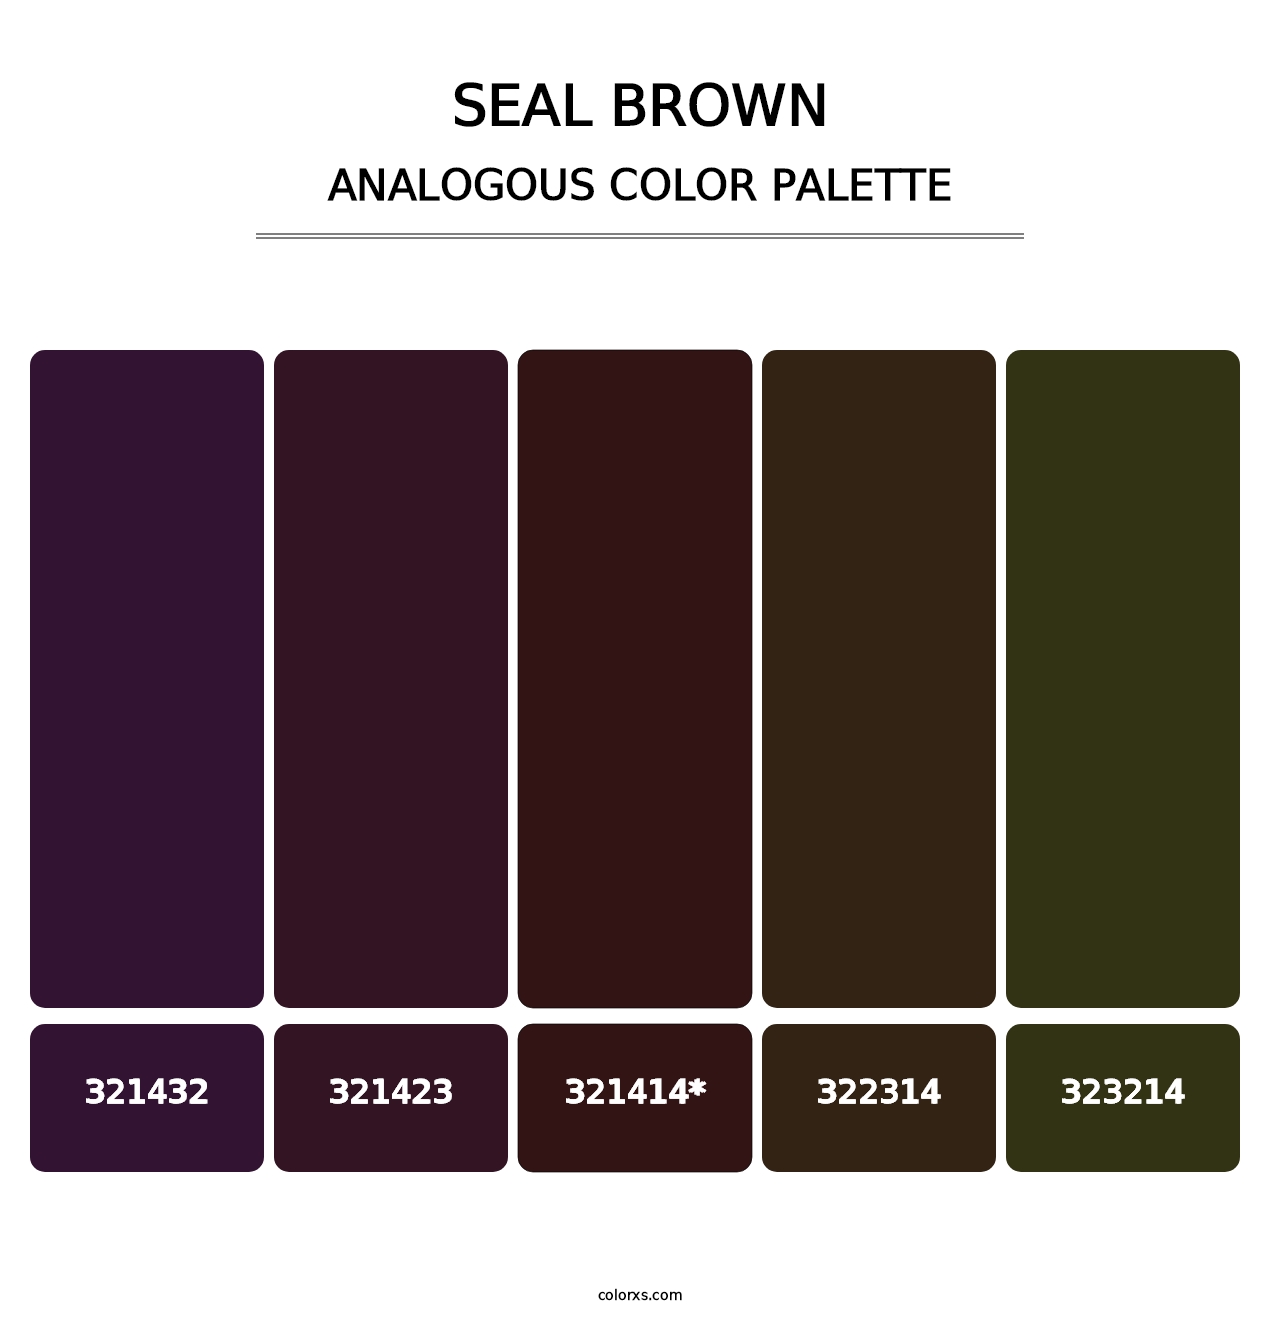 Seal brown - Analogous Color Palette